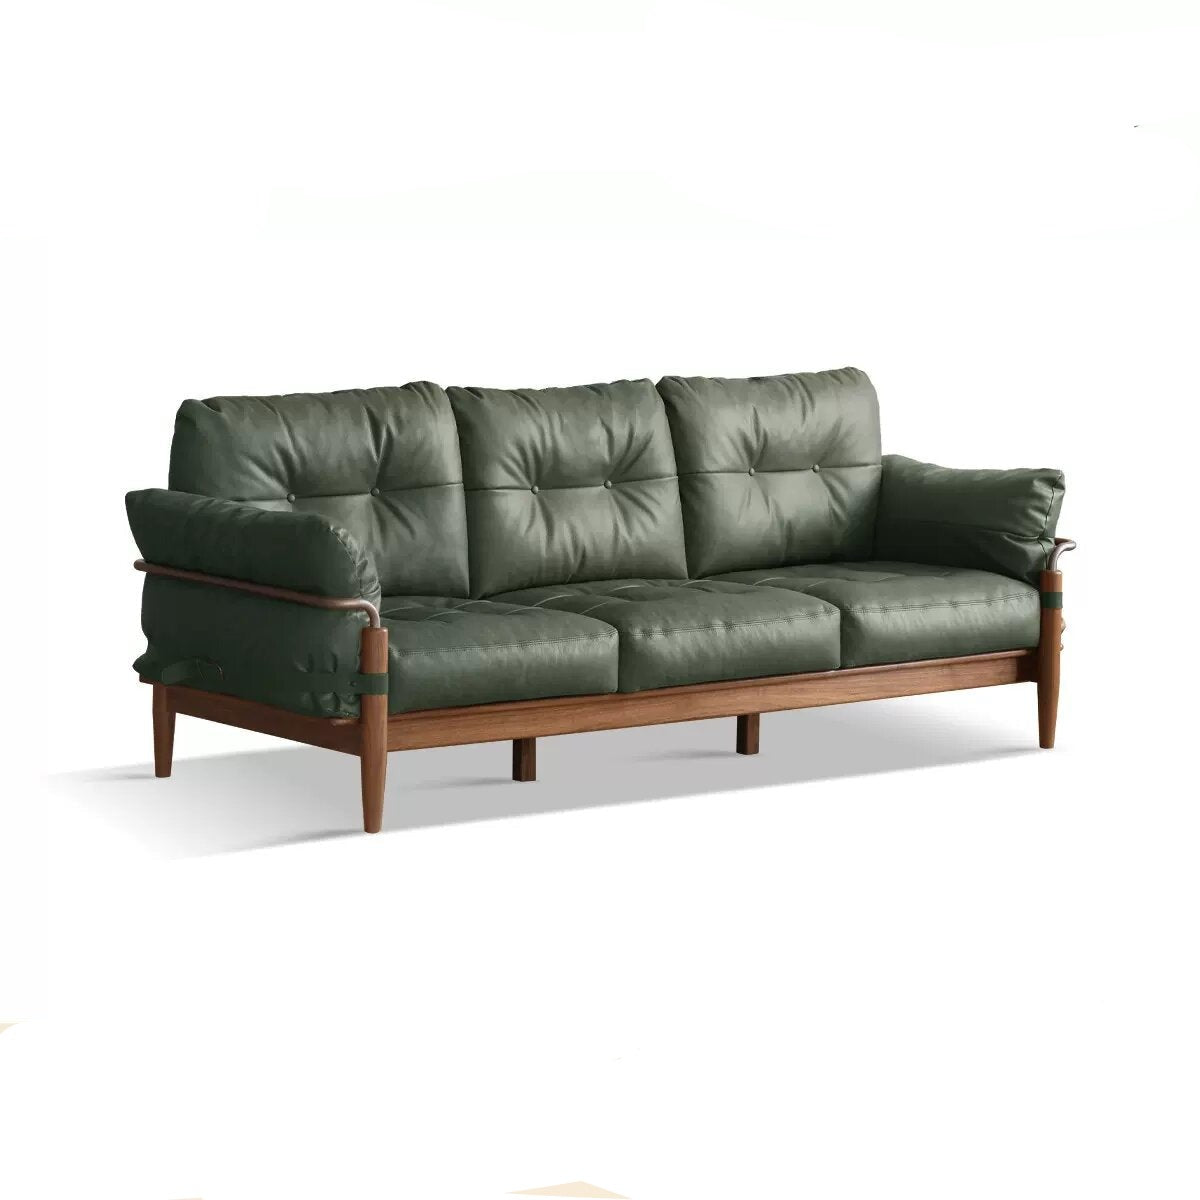 Black walnut solid wood Leather sofa+